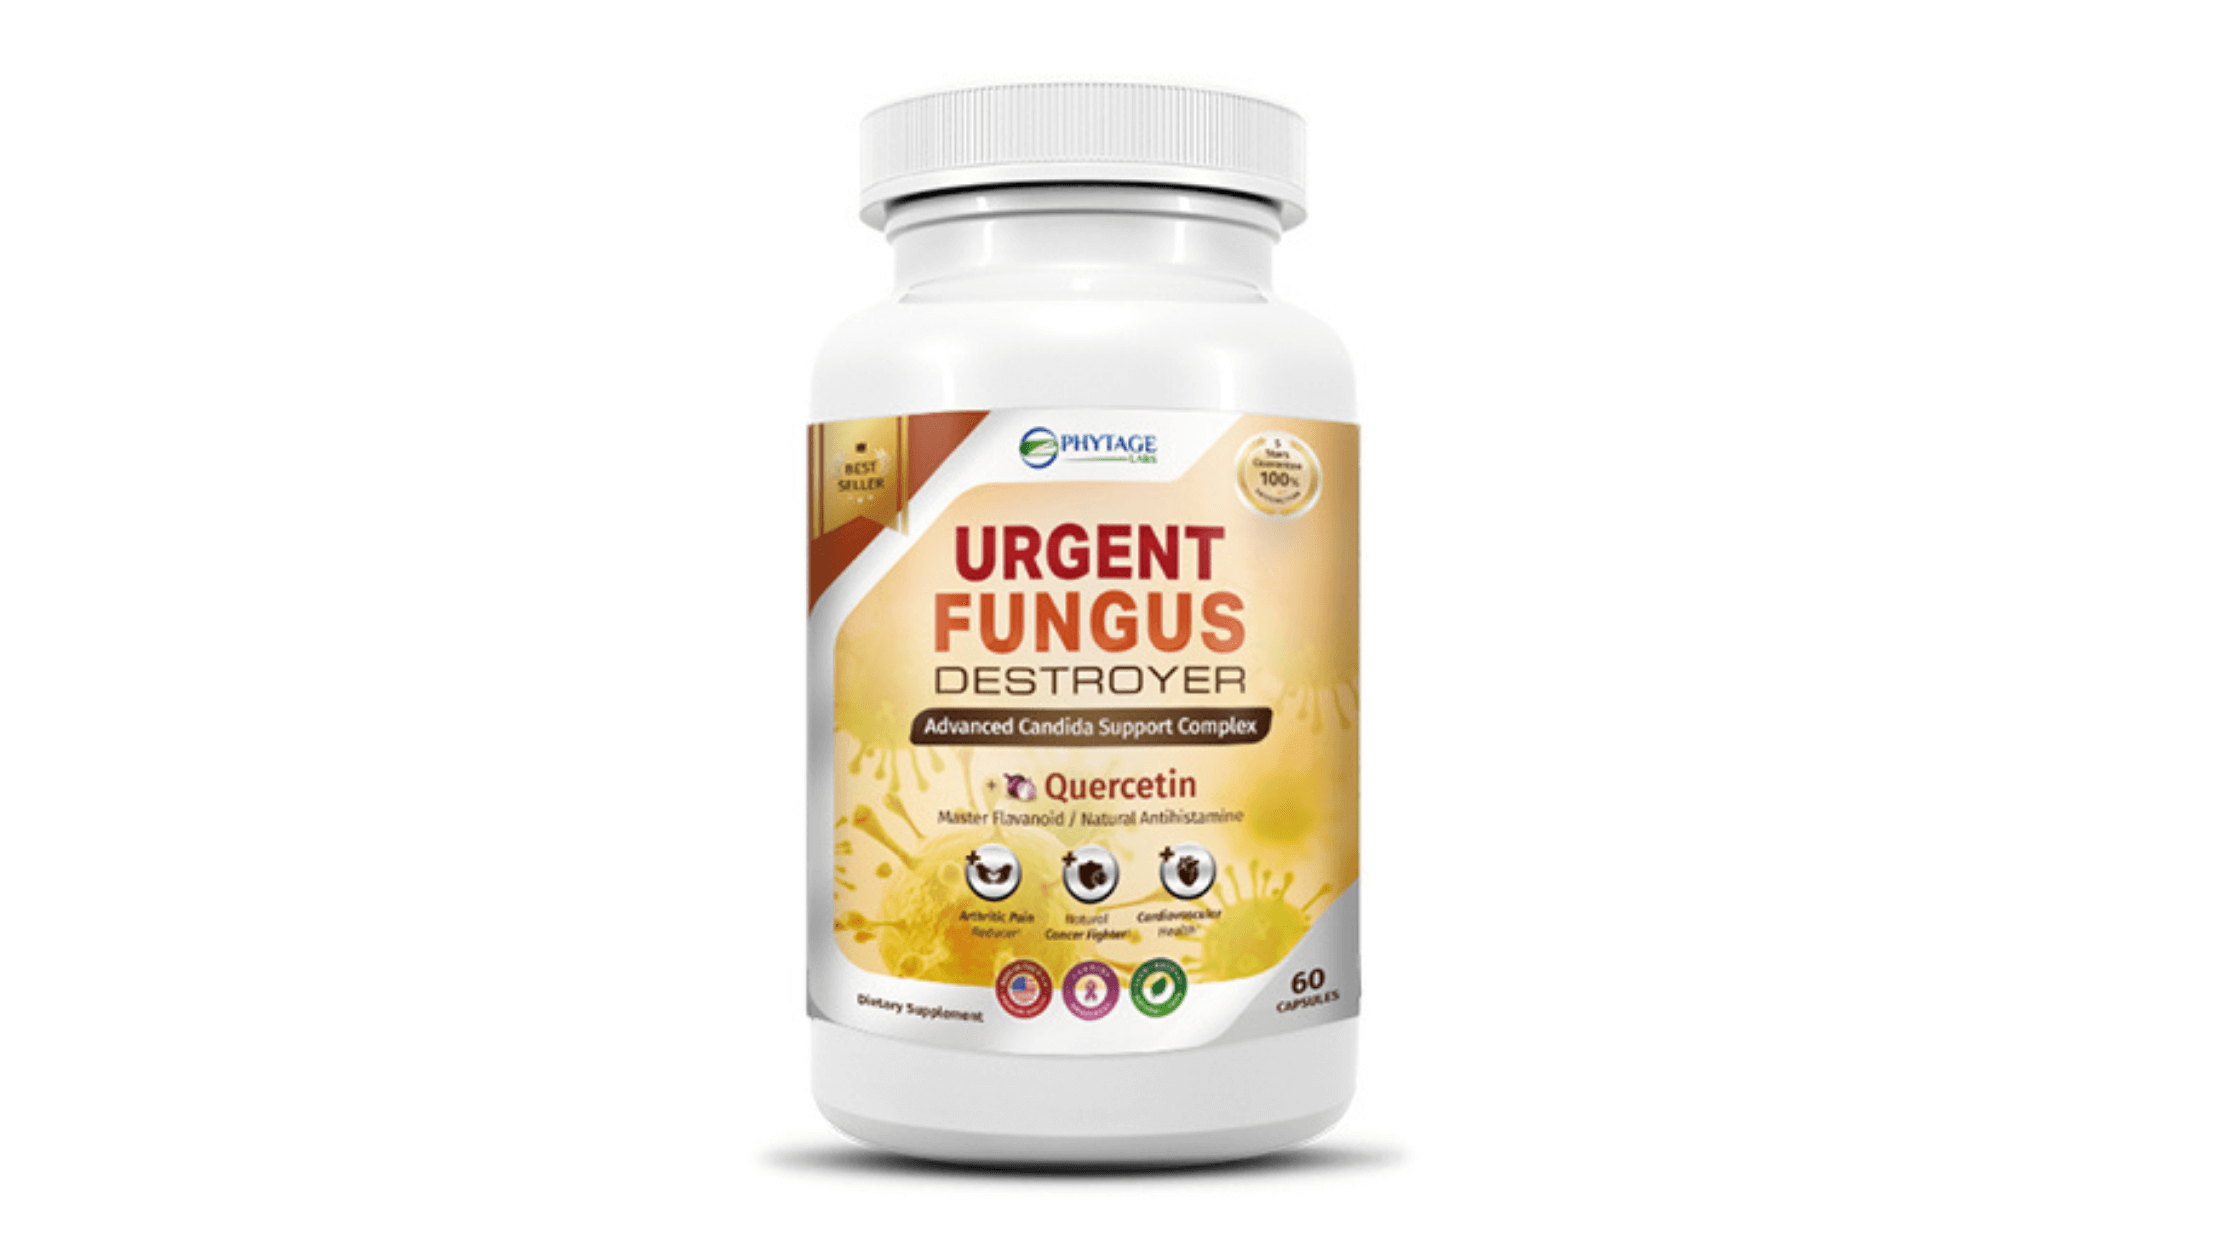 Urgent Fungus Destroyer reviews